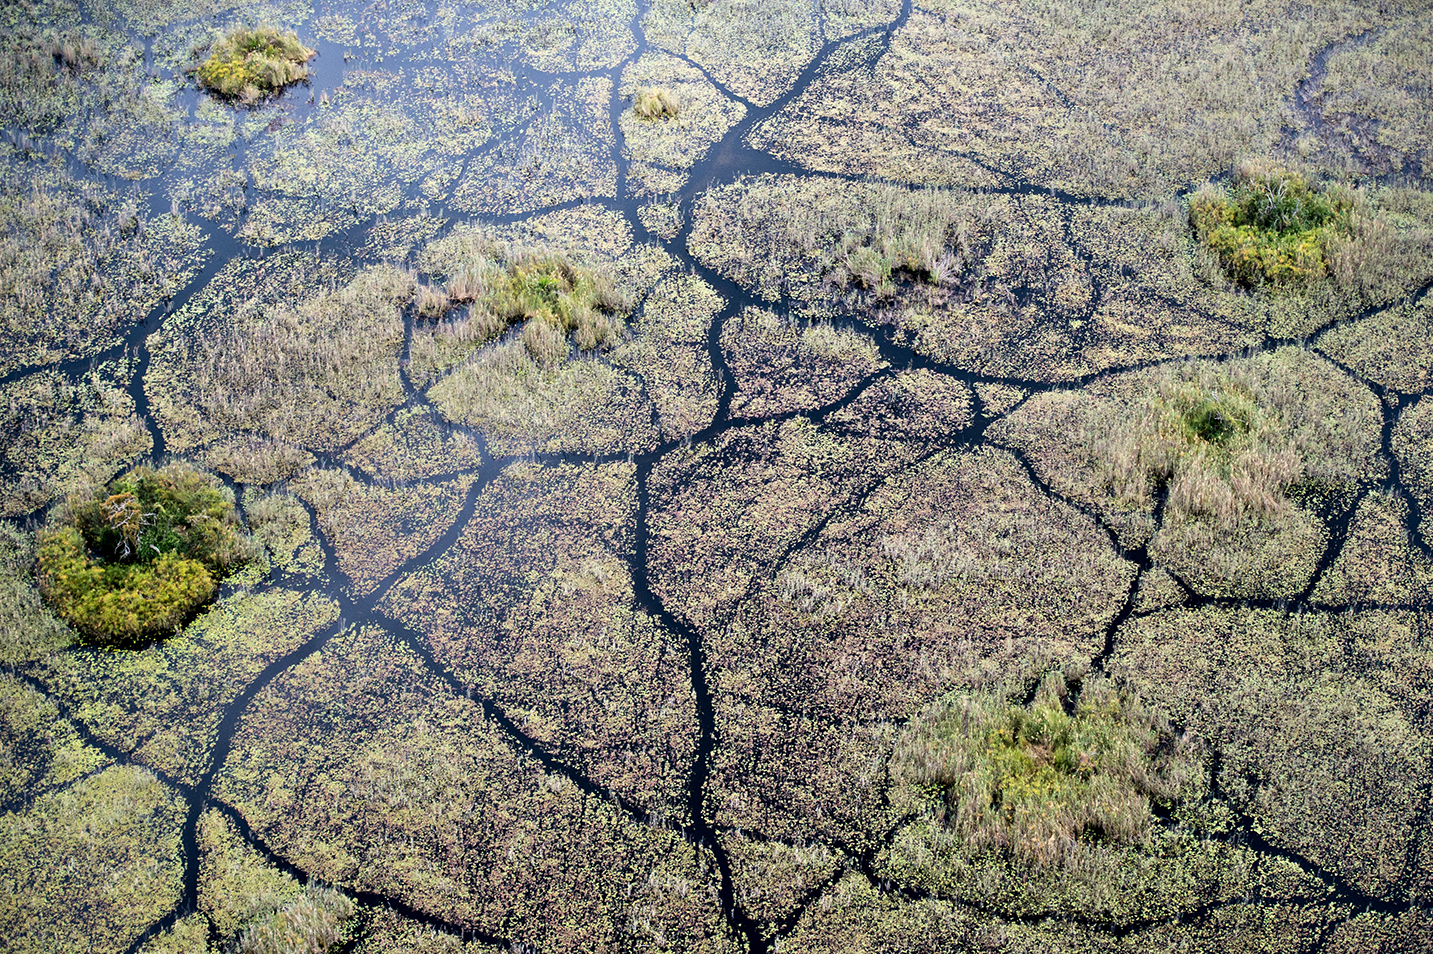 An aerial shot of the Vumbura Plains in the Okavango Delta, Botswana.